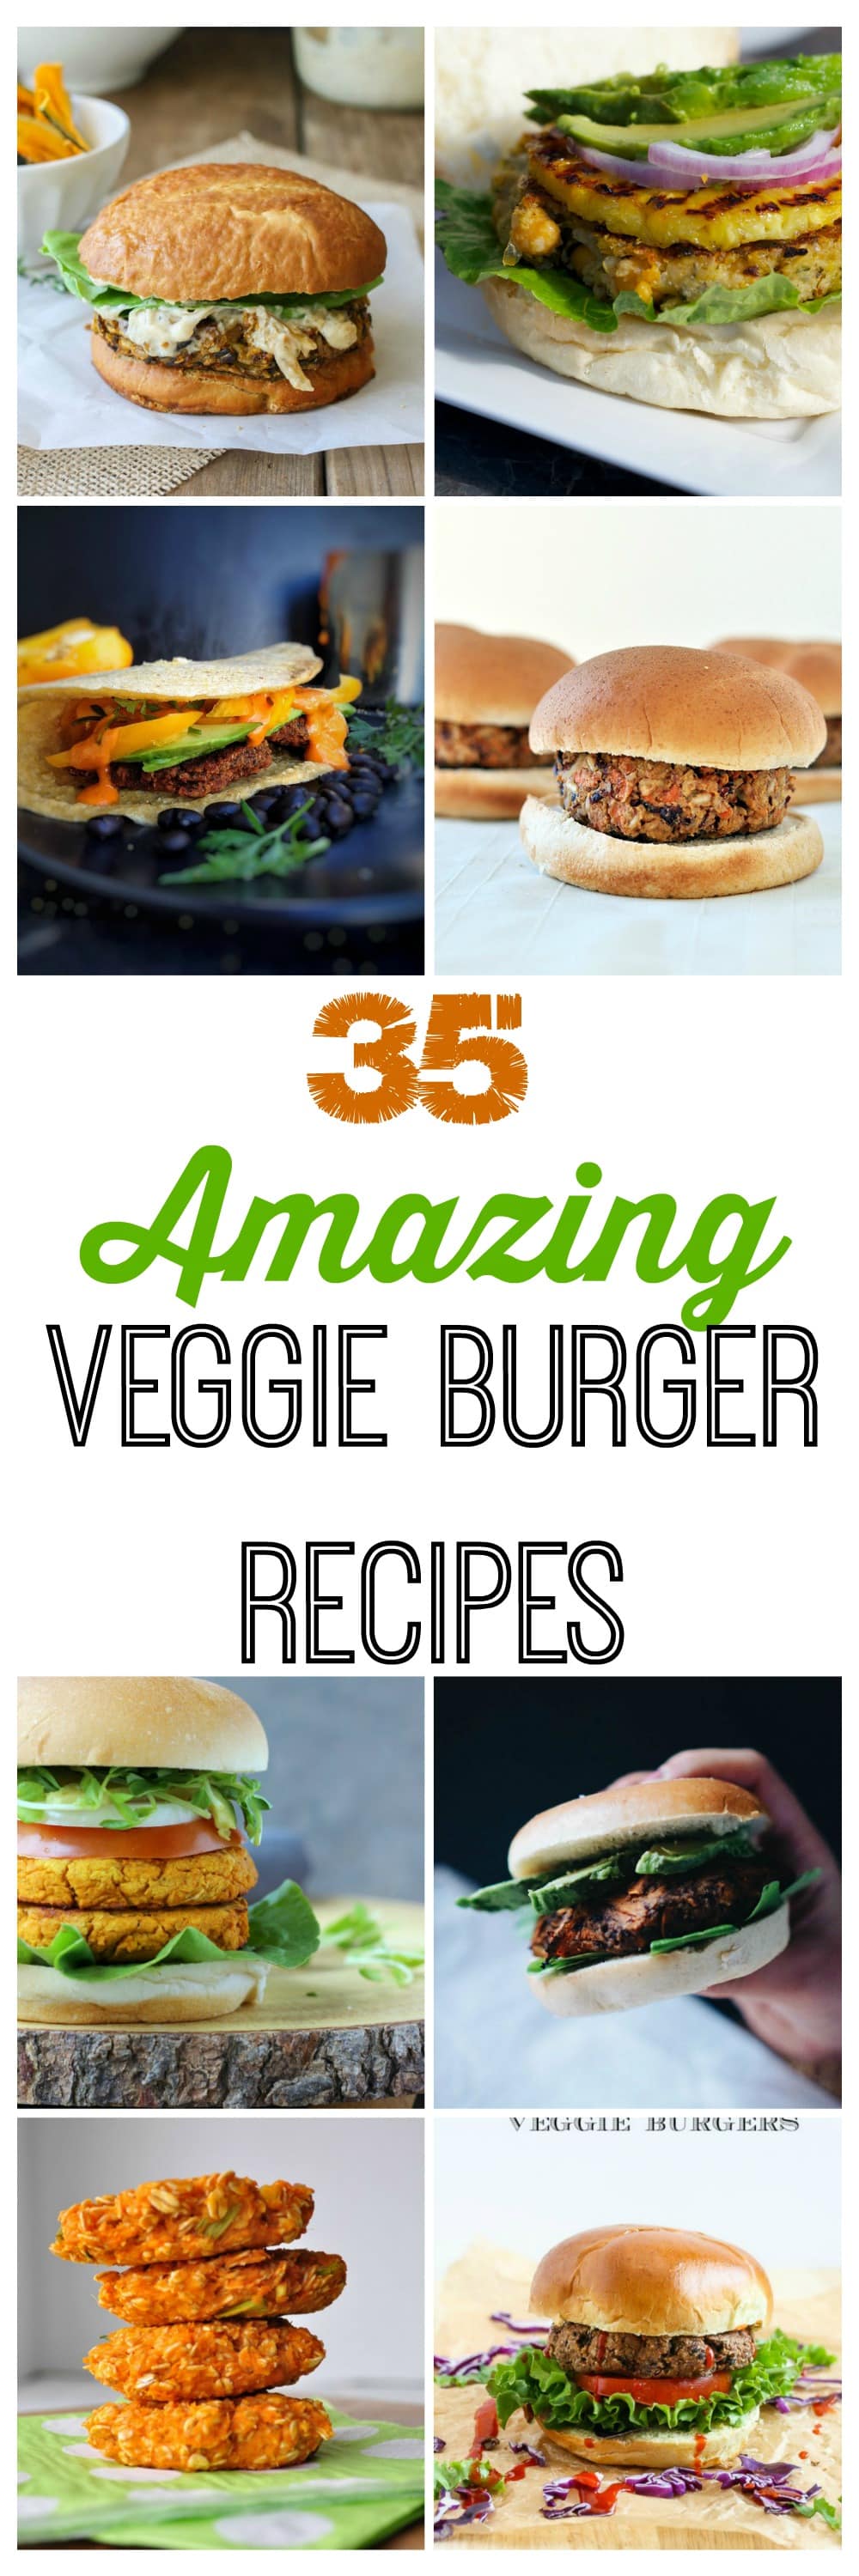 35 Veggie Burger Recipes - My Whole Food Life